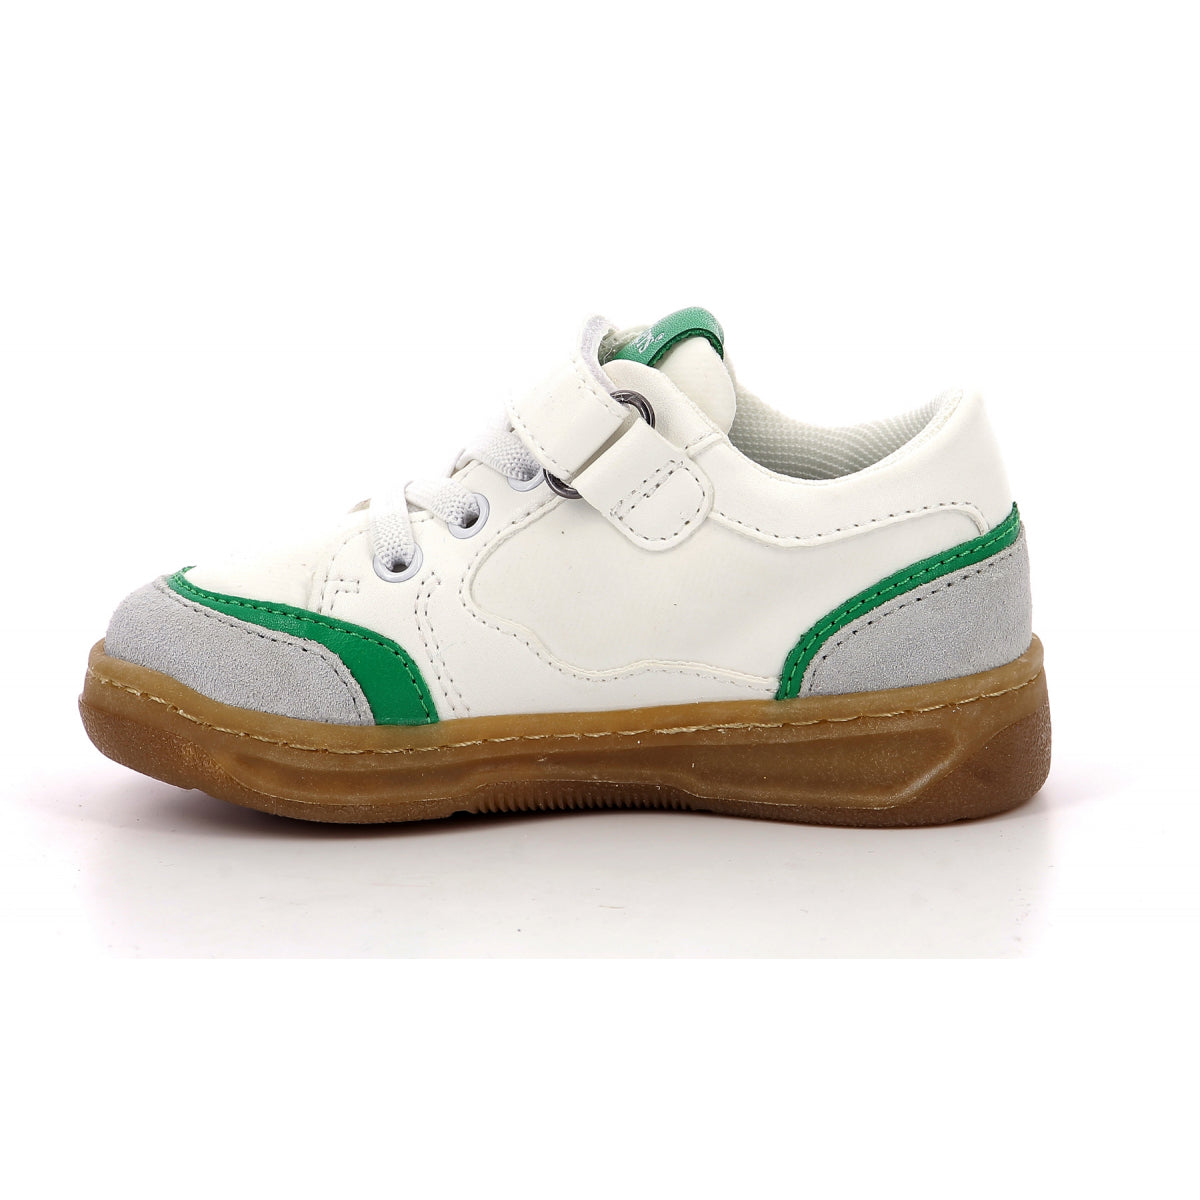 KICKERS KOUIC blanc gris & vert chaussure/basket